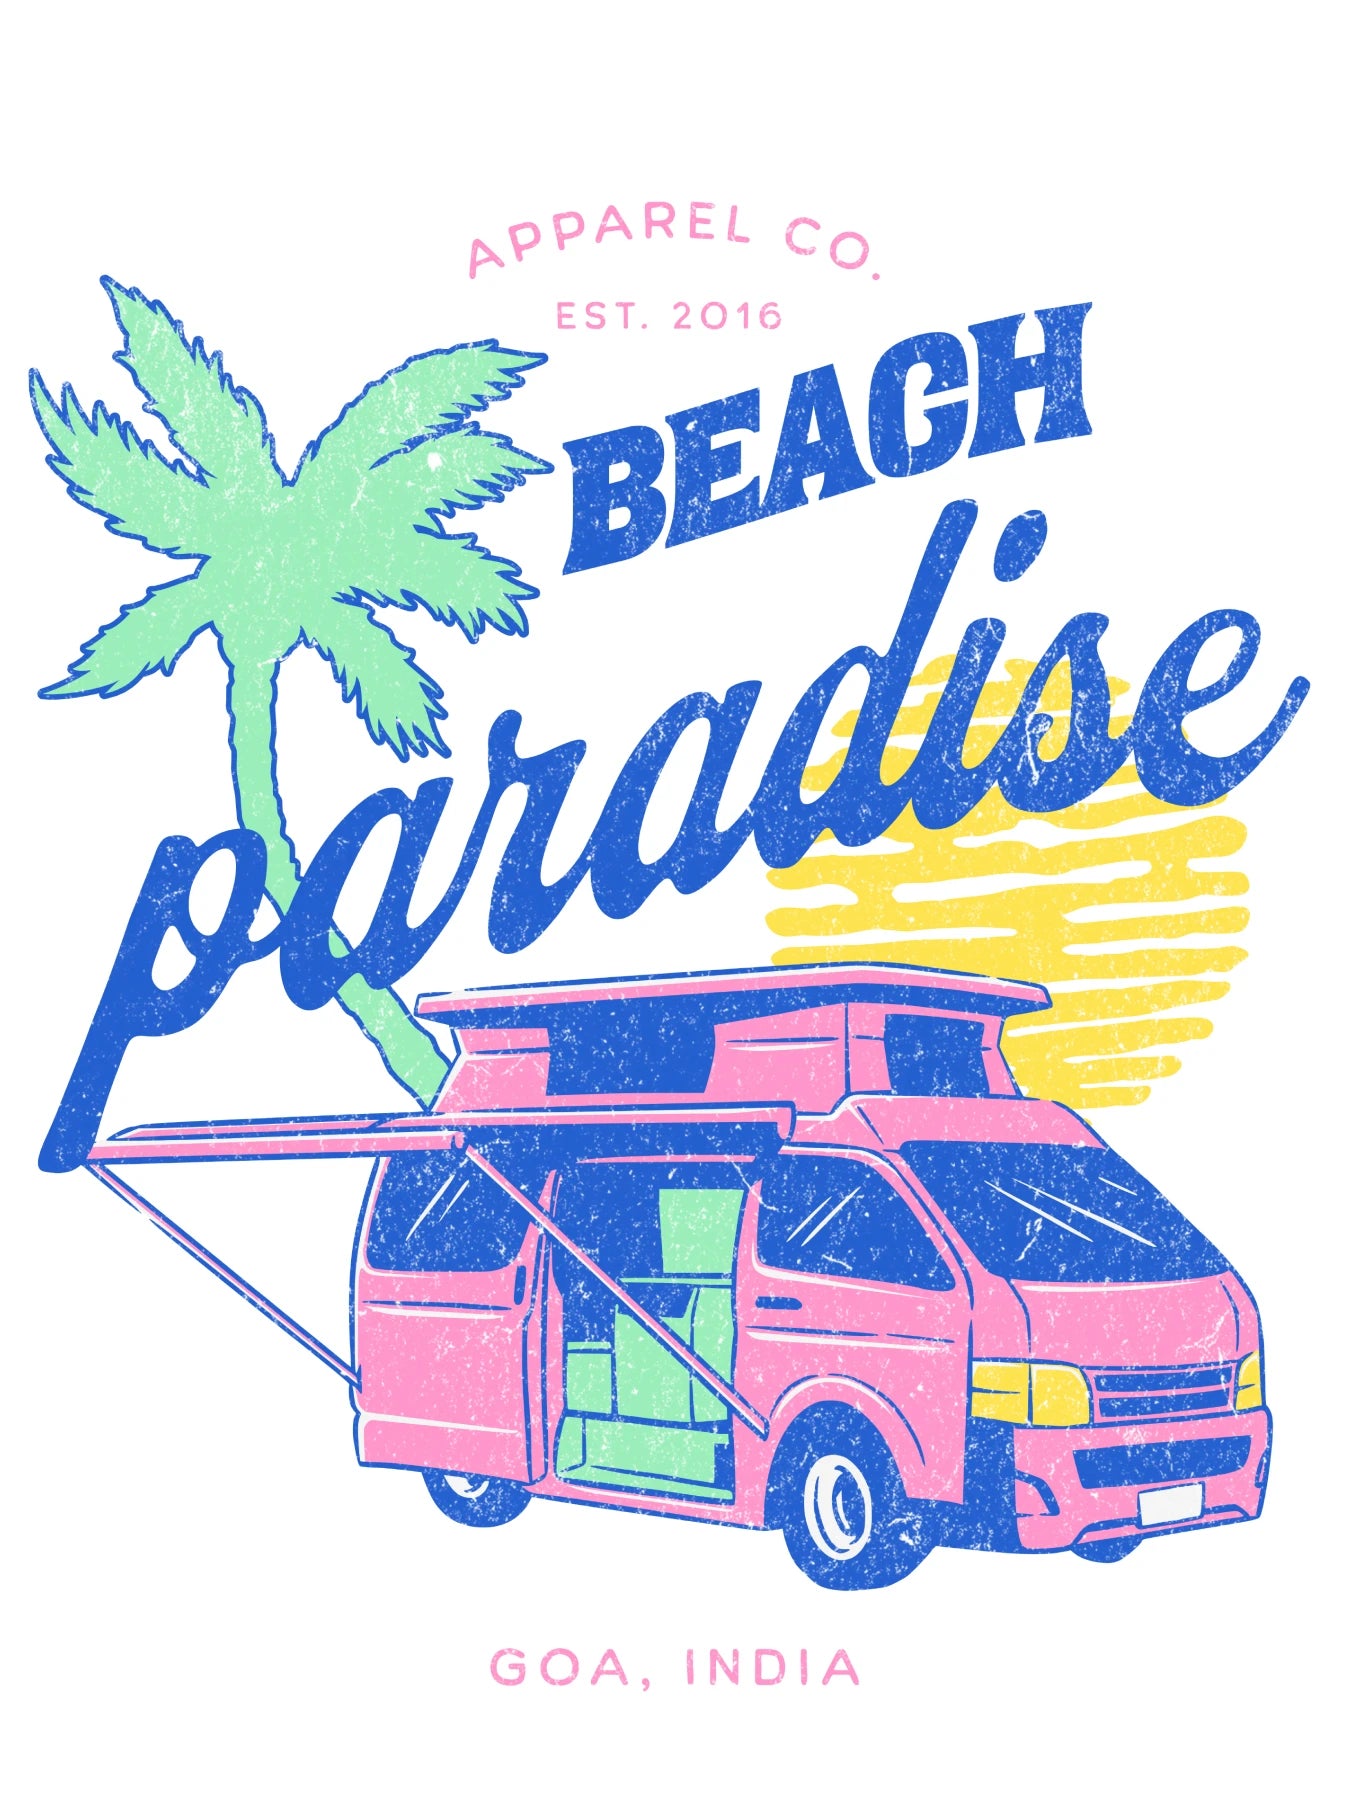 Beach Paradise - Unisex T-Shirt